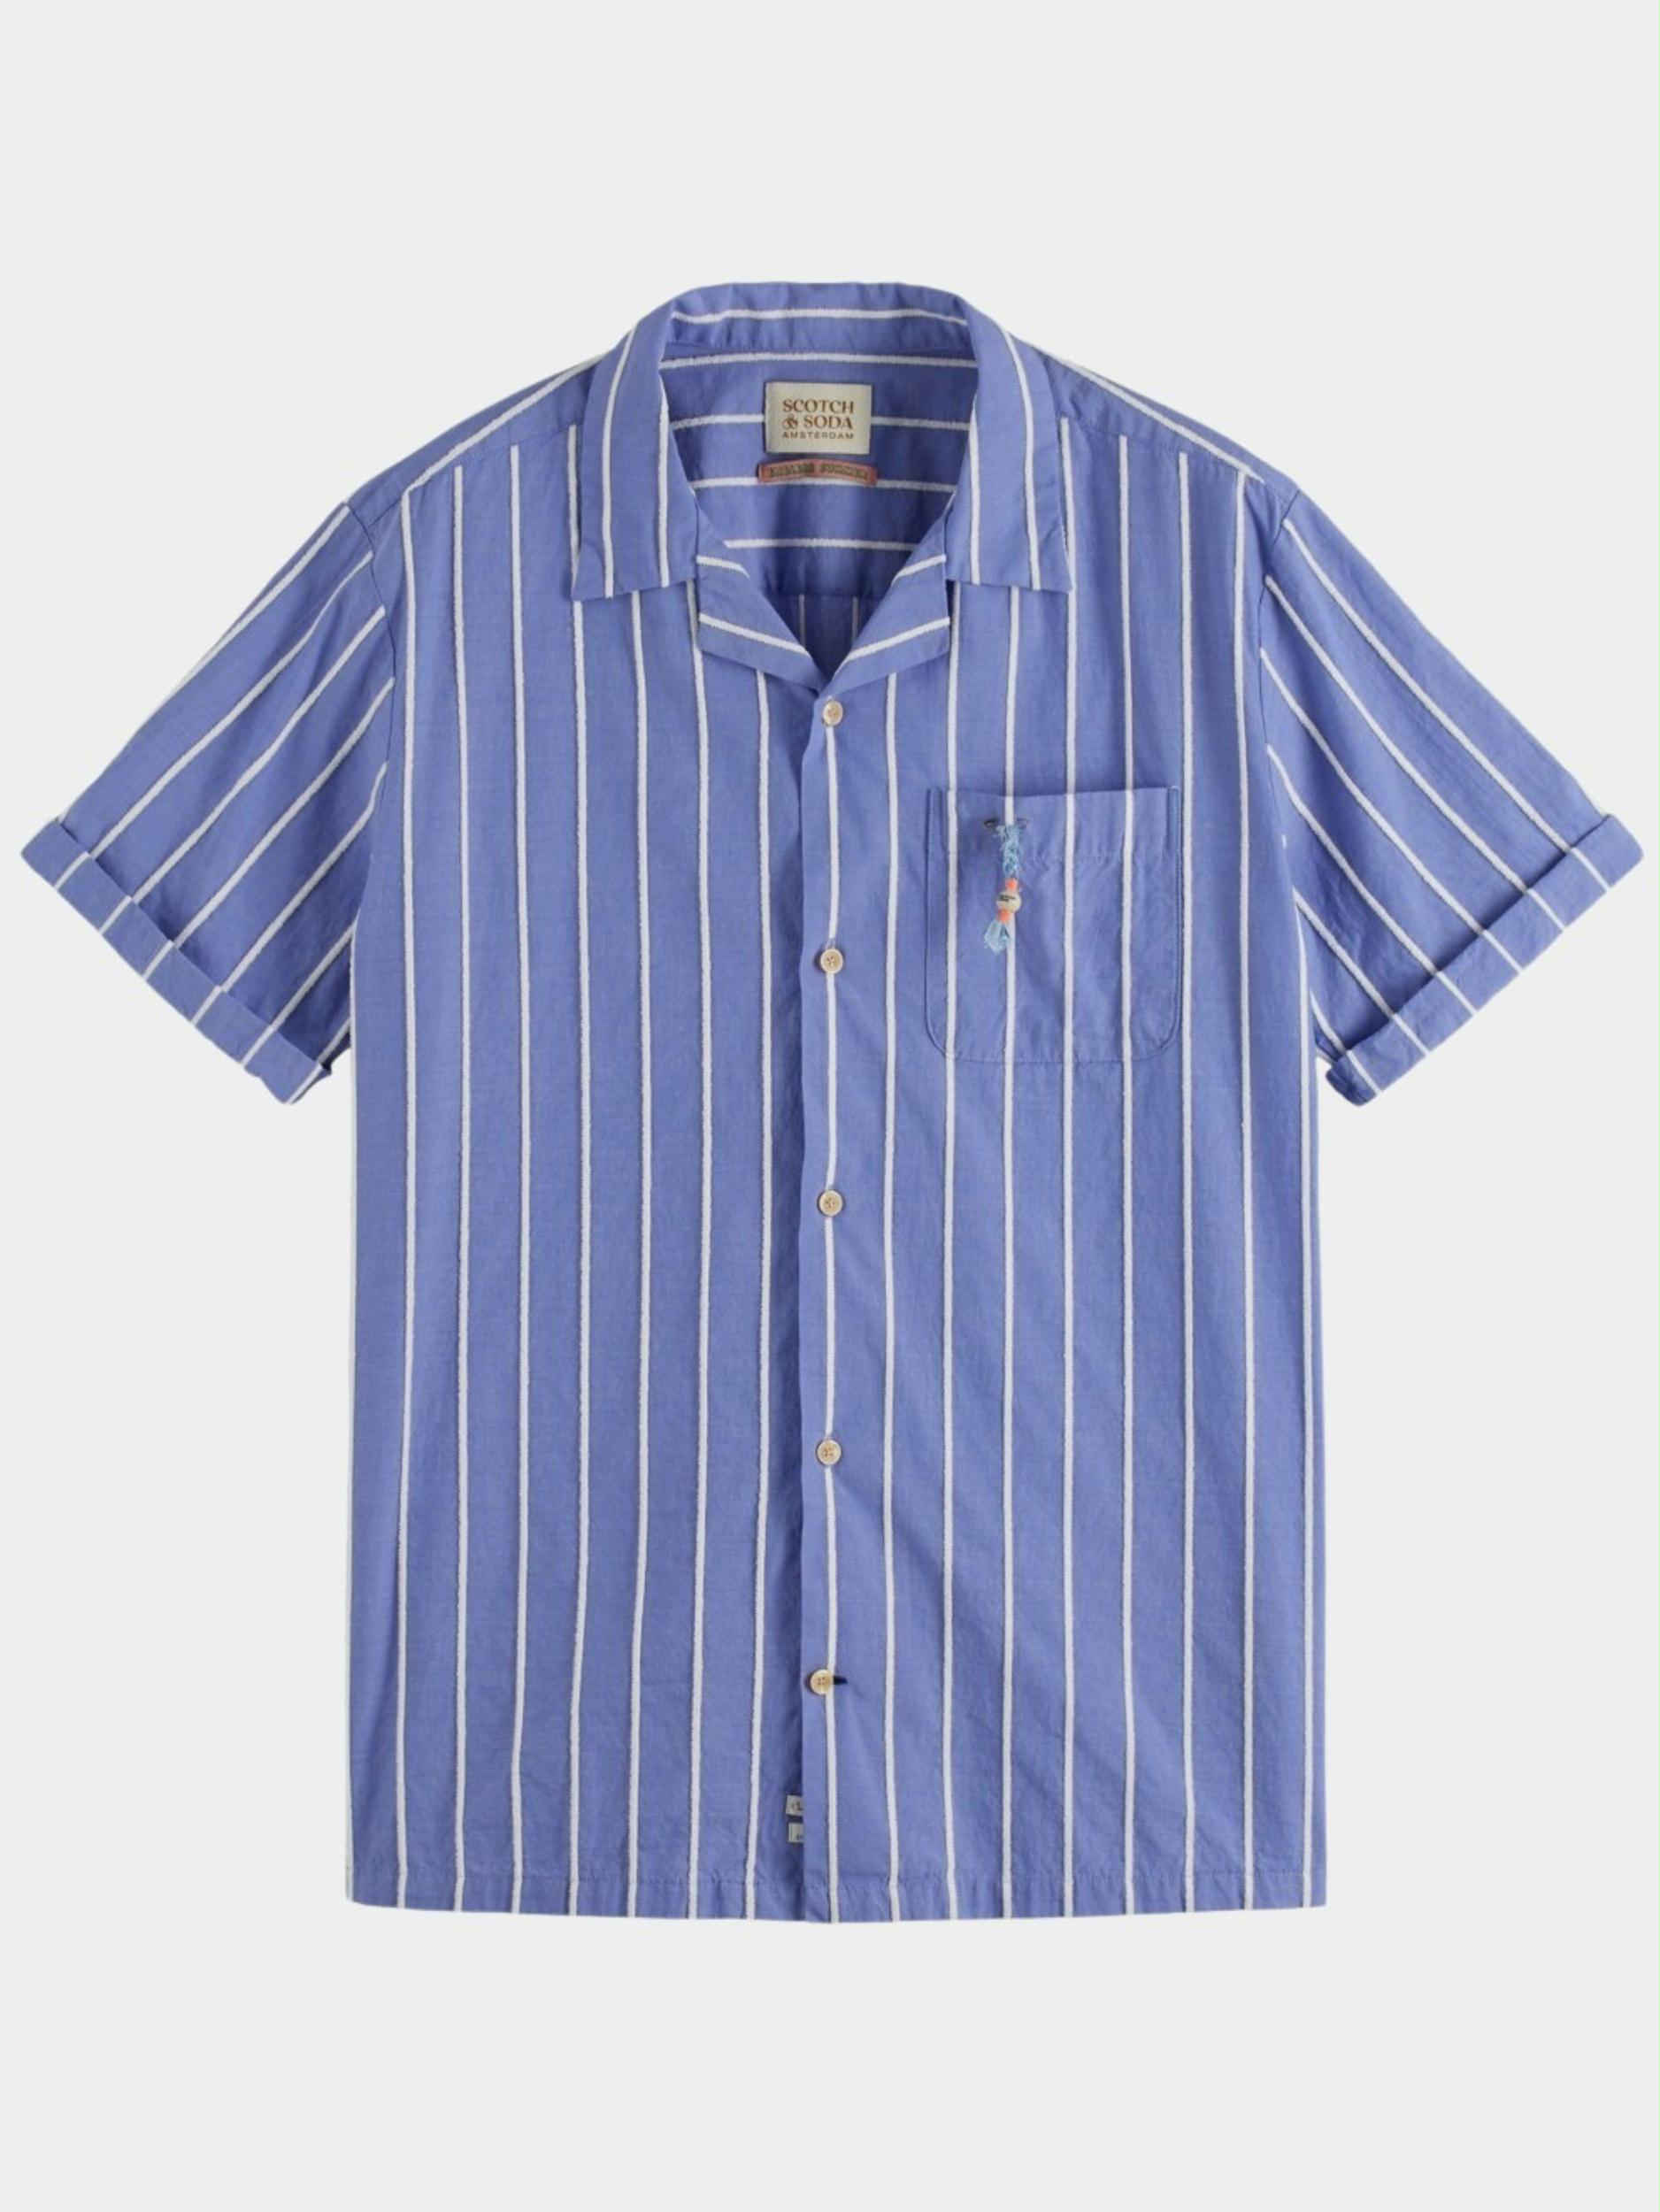 Scotch & Soda Casual hemd korte mouw Blauw Toweling striped camp shirt 171640/6057